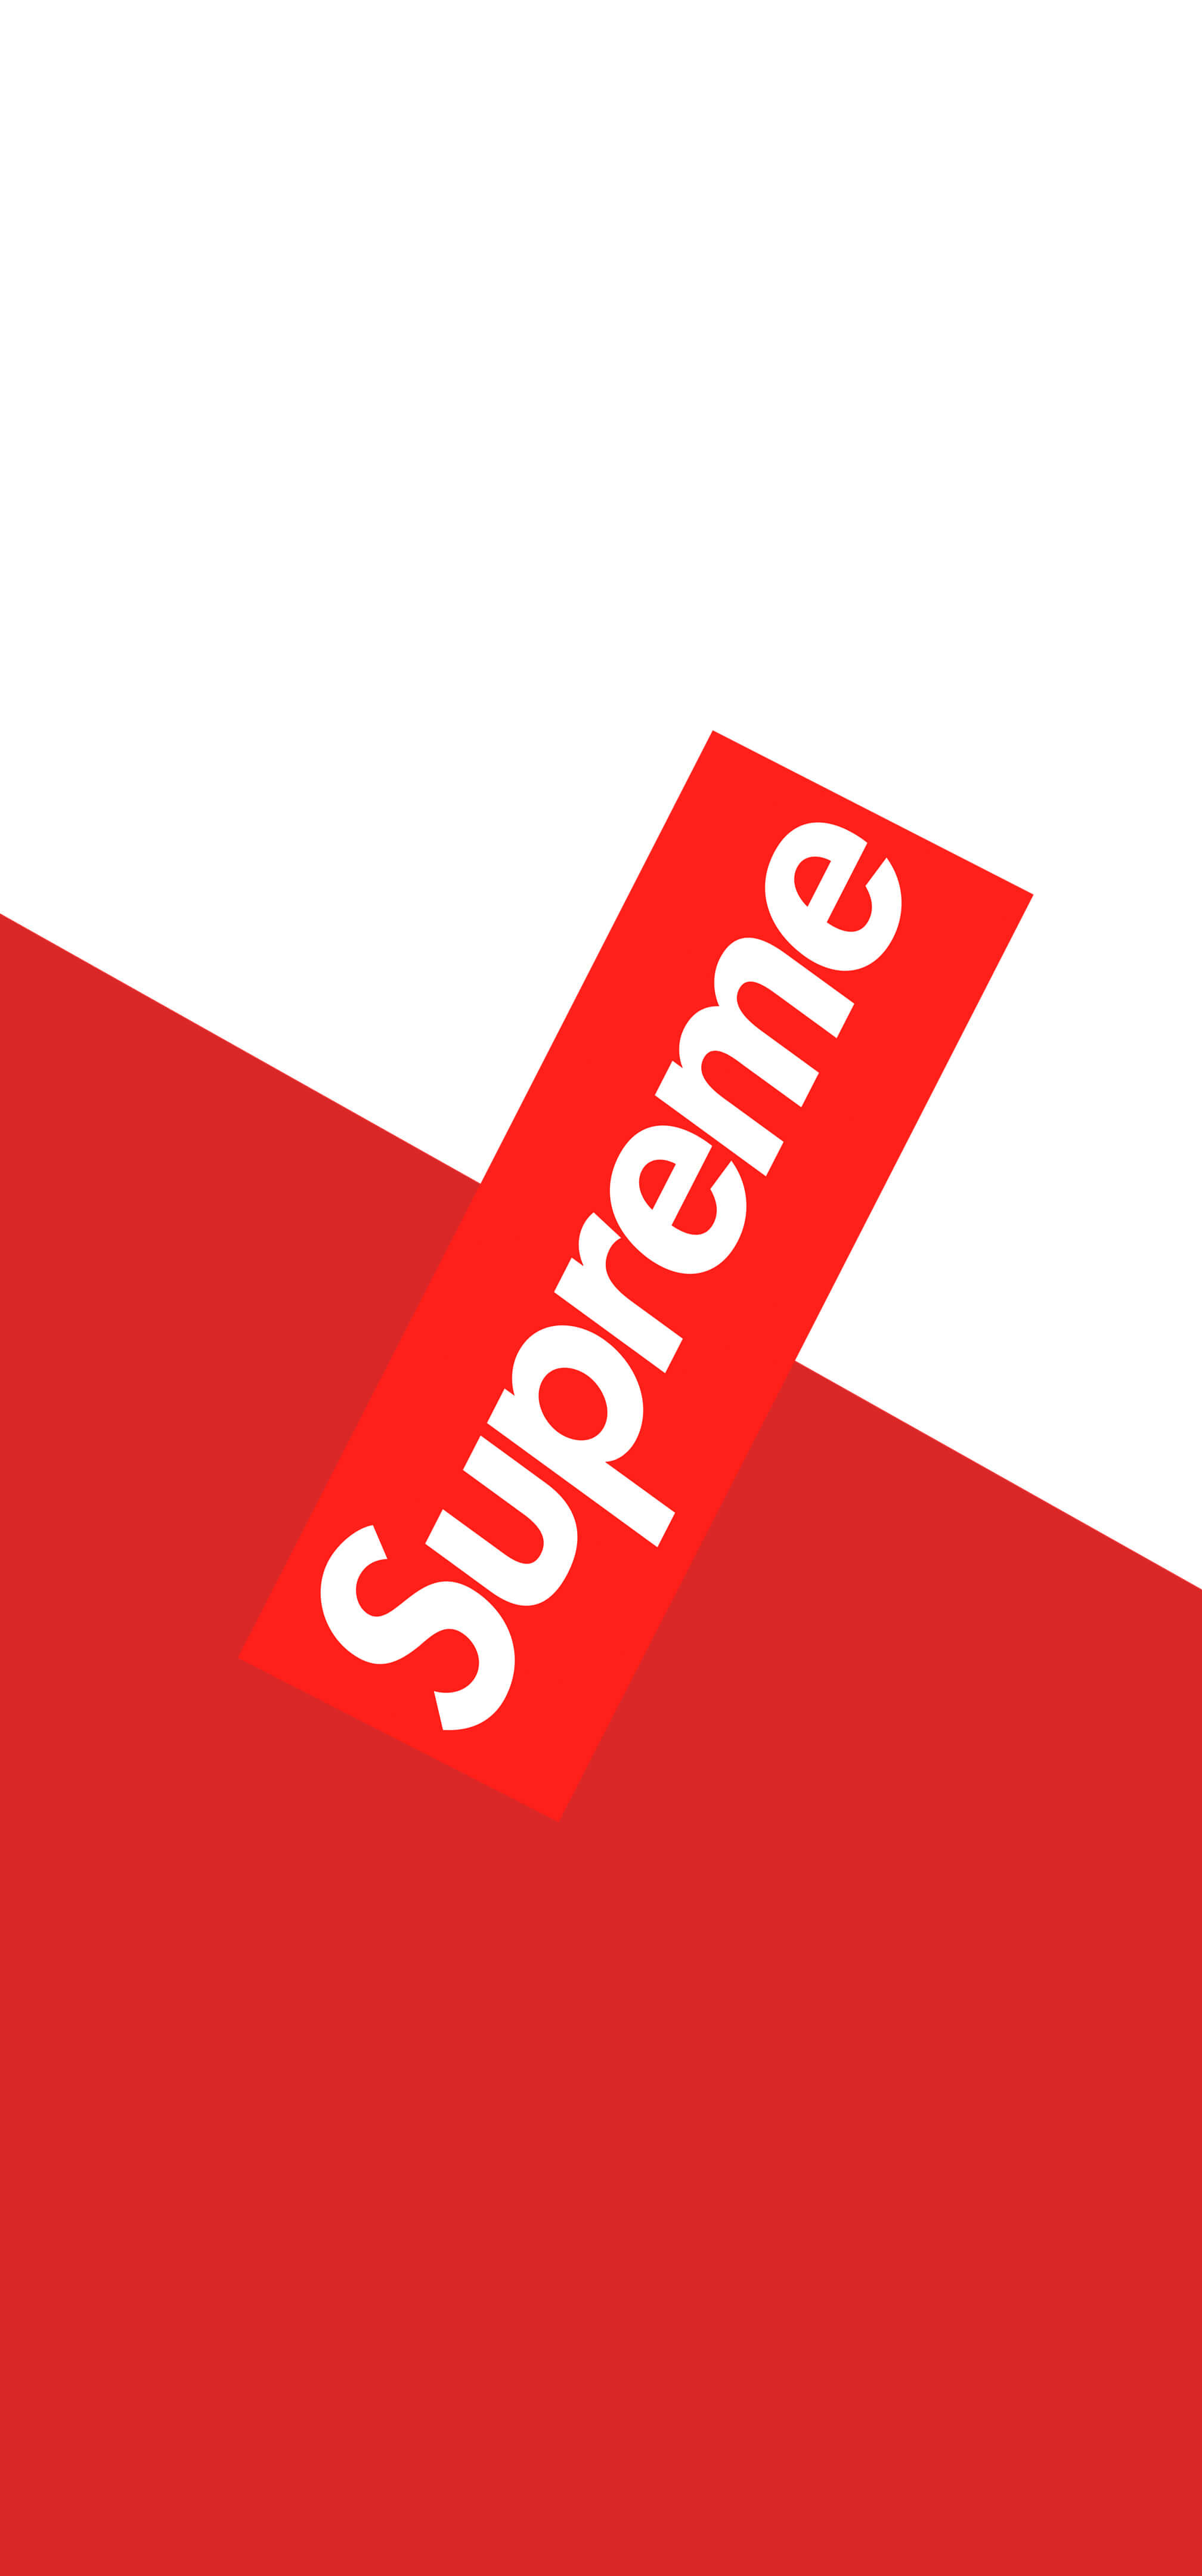 Cool supreme logo HD wallpapers